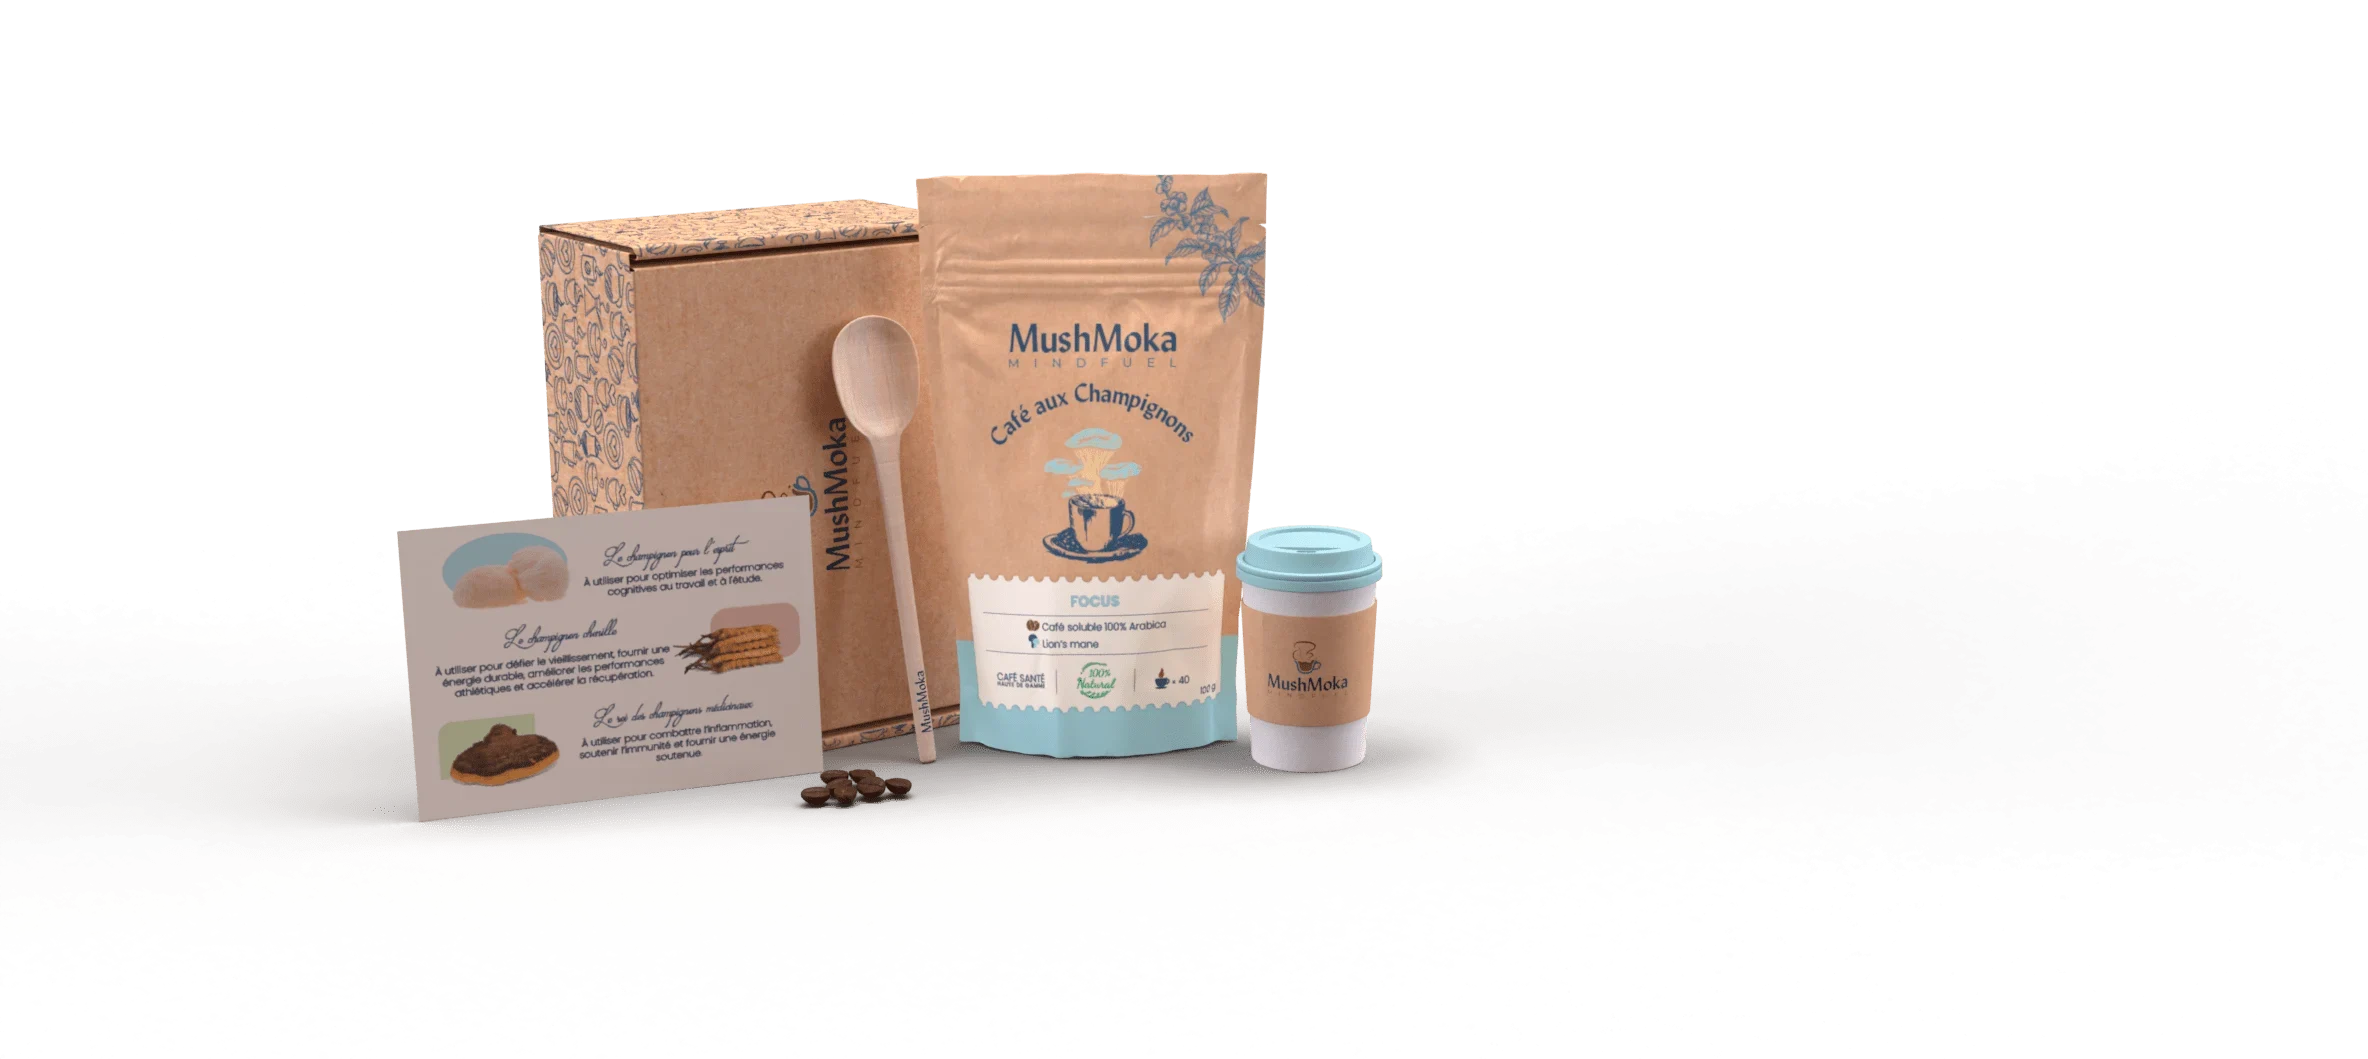 Packaging café aux champignons MushMoka